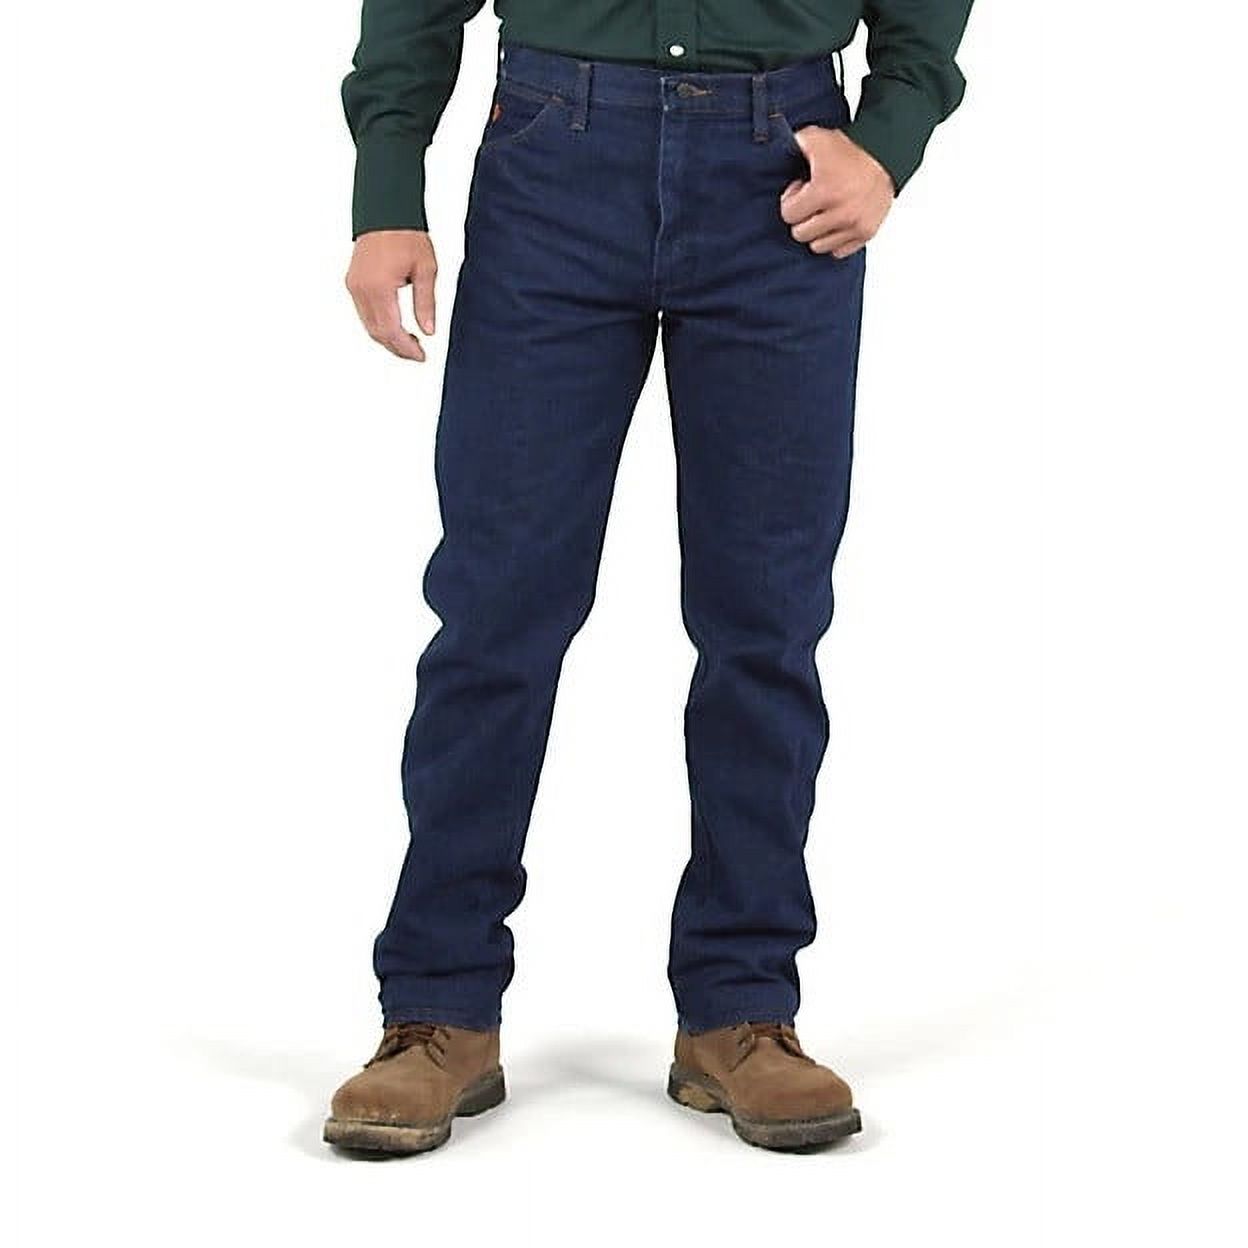 Men's Wrangler Workwear Flame Resistant Original Fit Jean - image 3 of 5